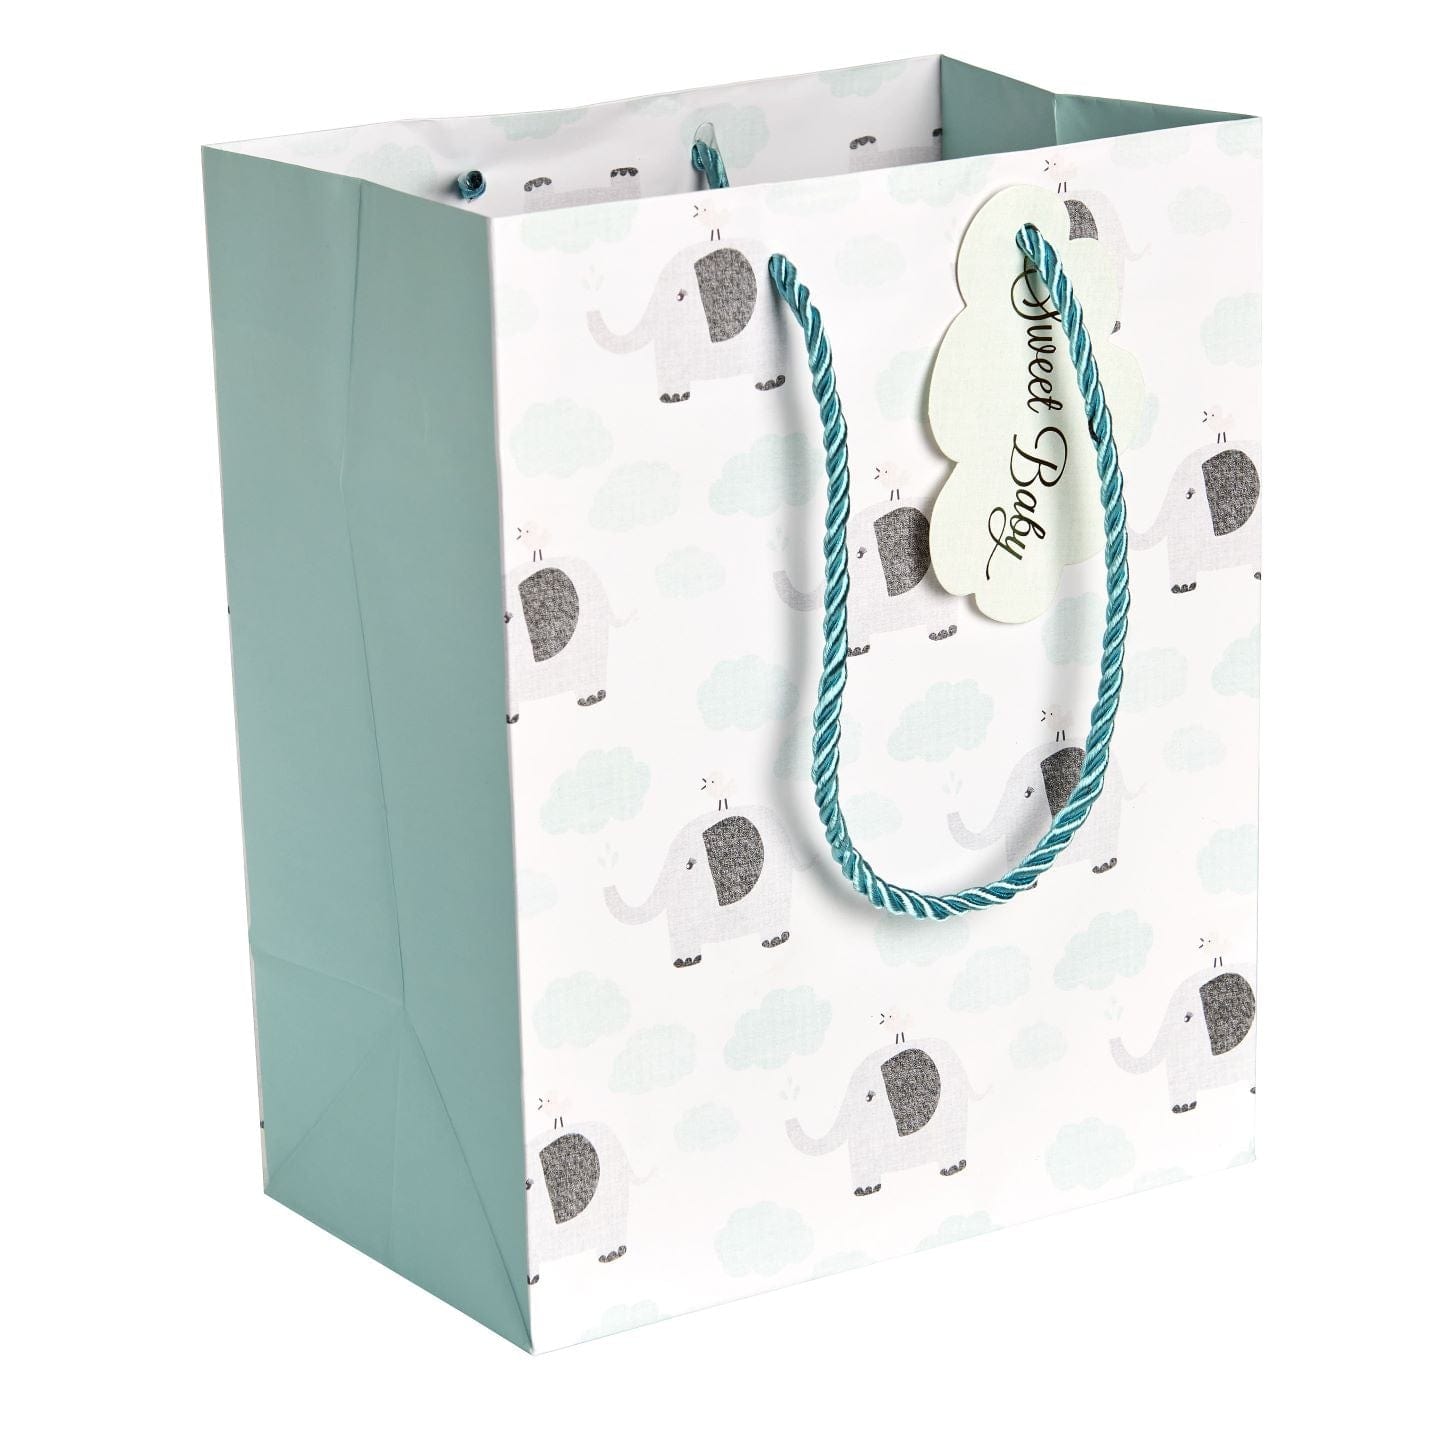 The Gift Wrap Company Orchid - Medium 2-Tone Kraft Gift Bag